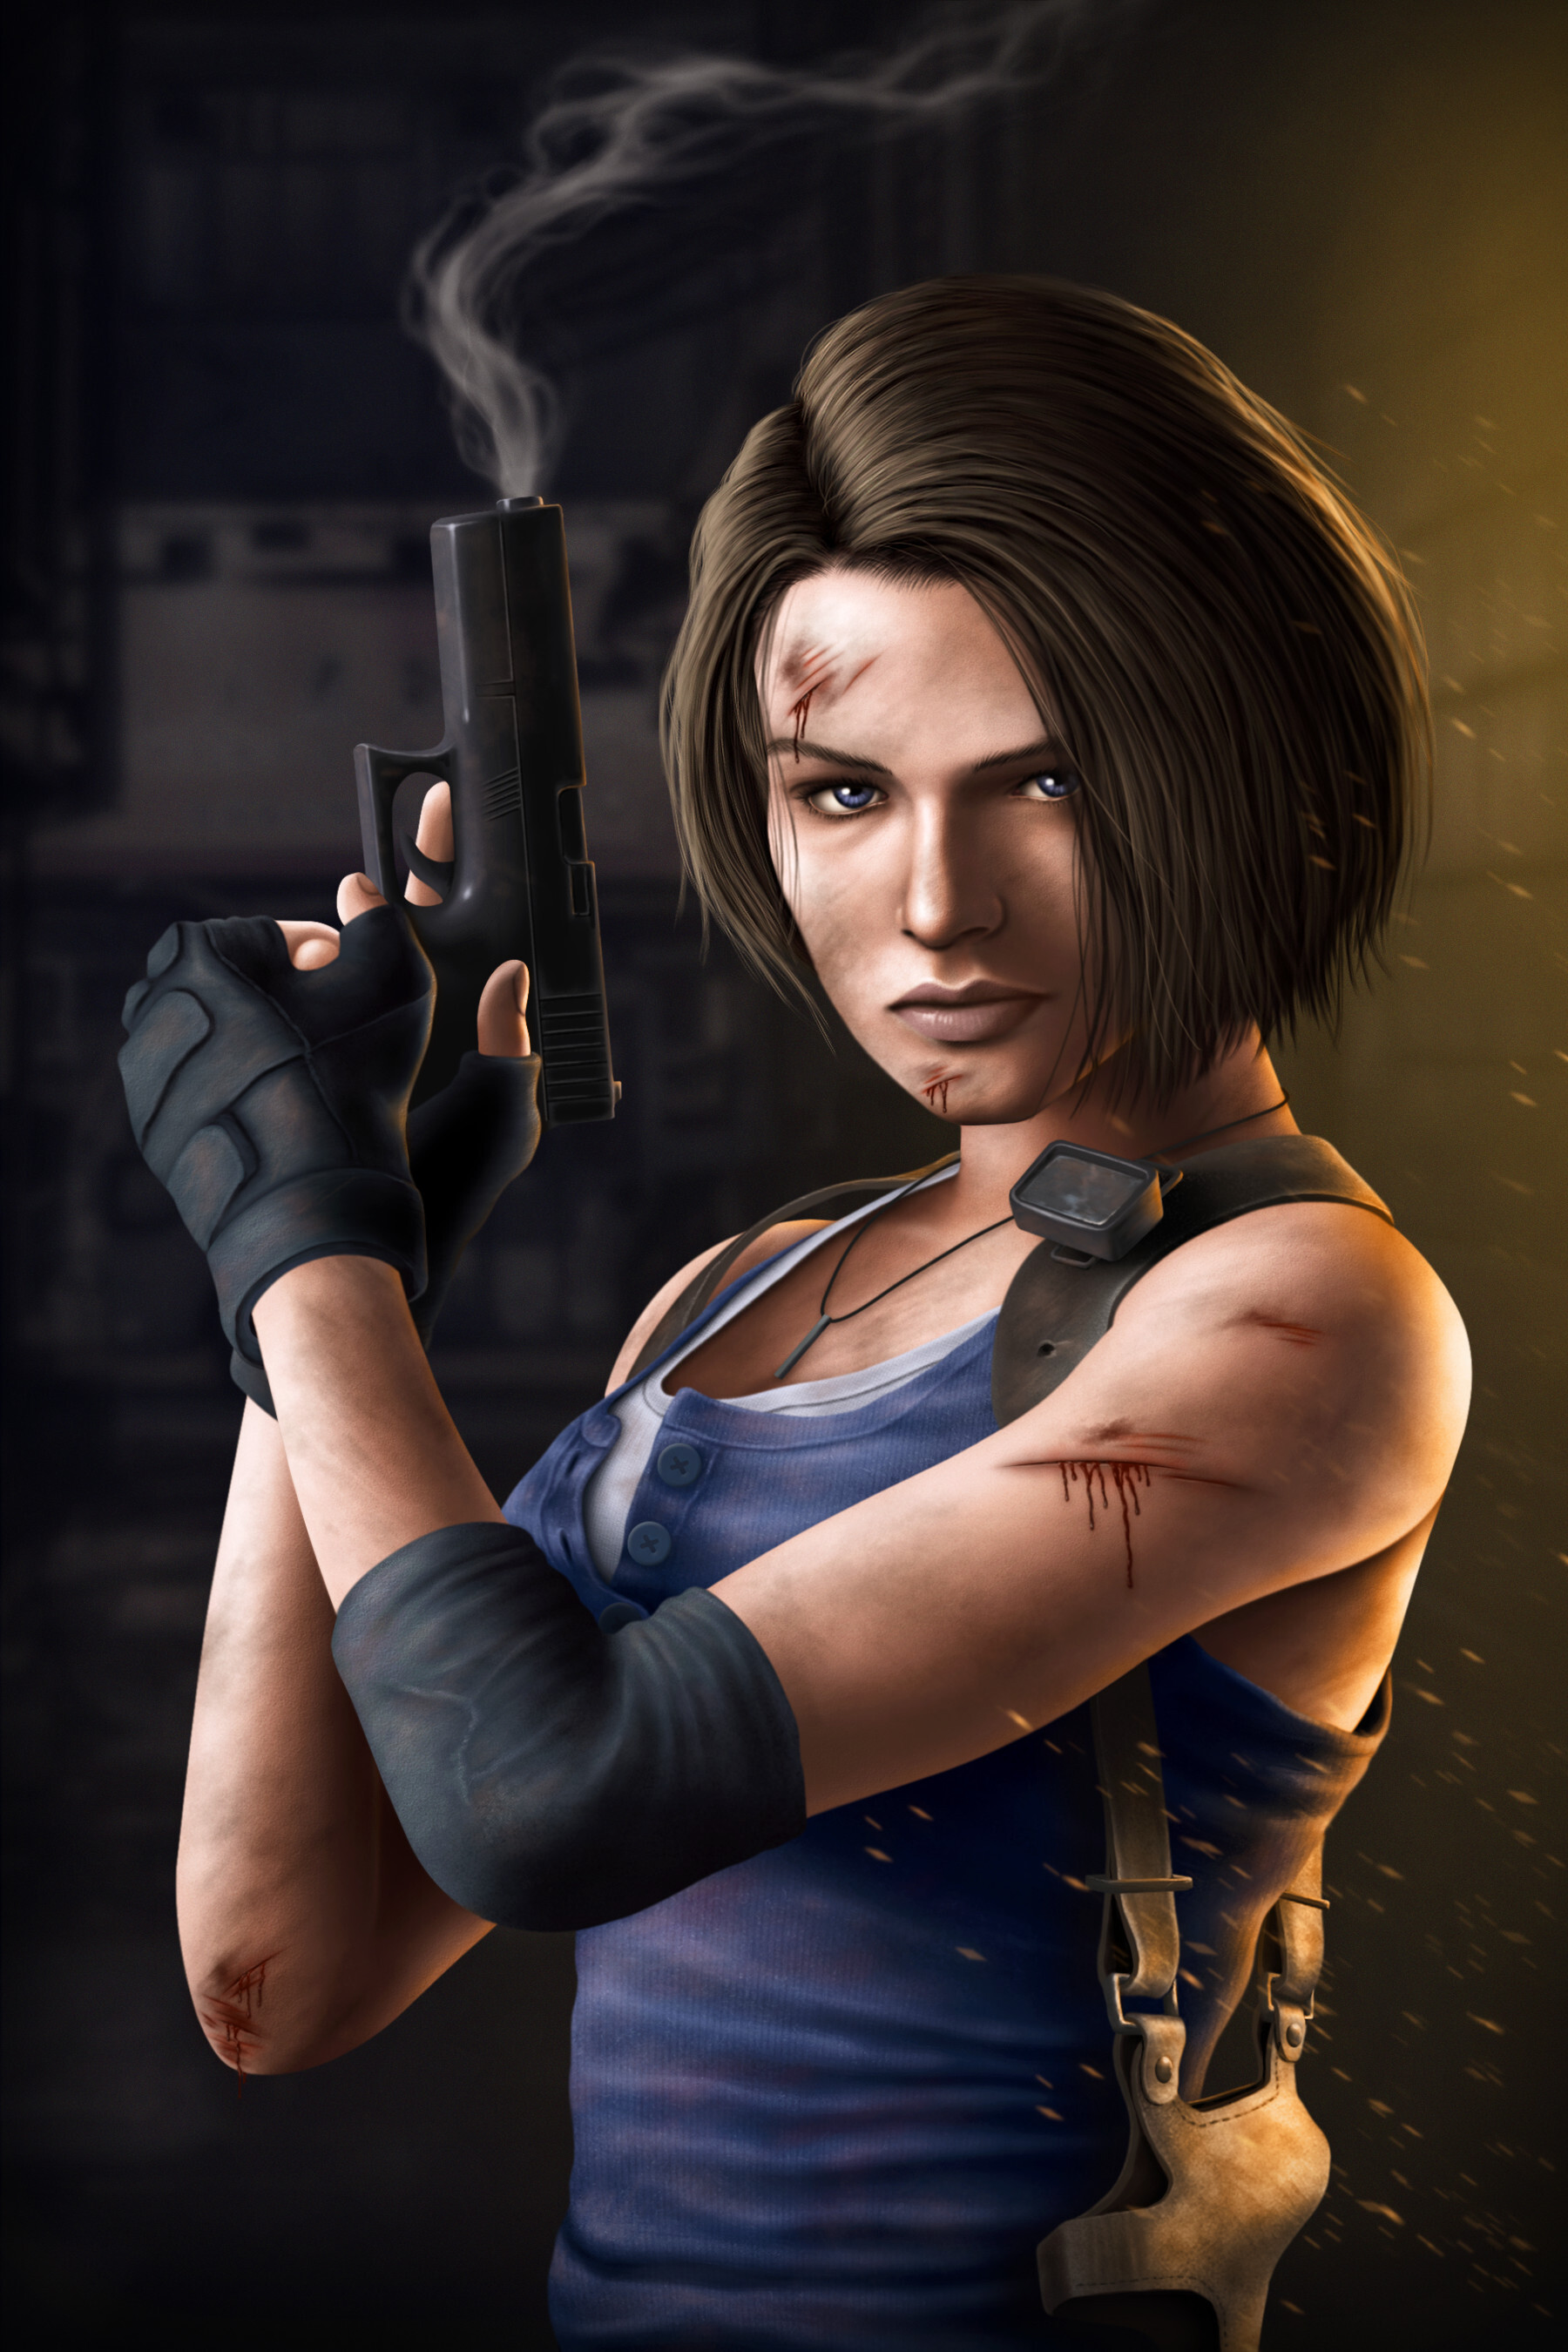 Jill Valentine (Resident Evil 3)